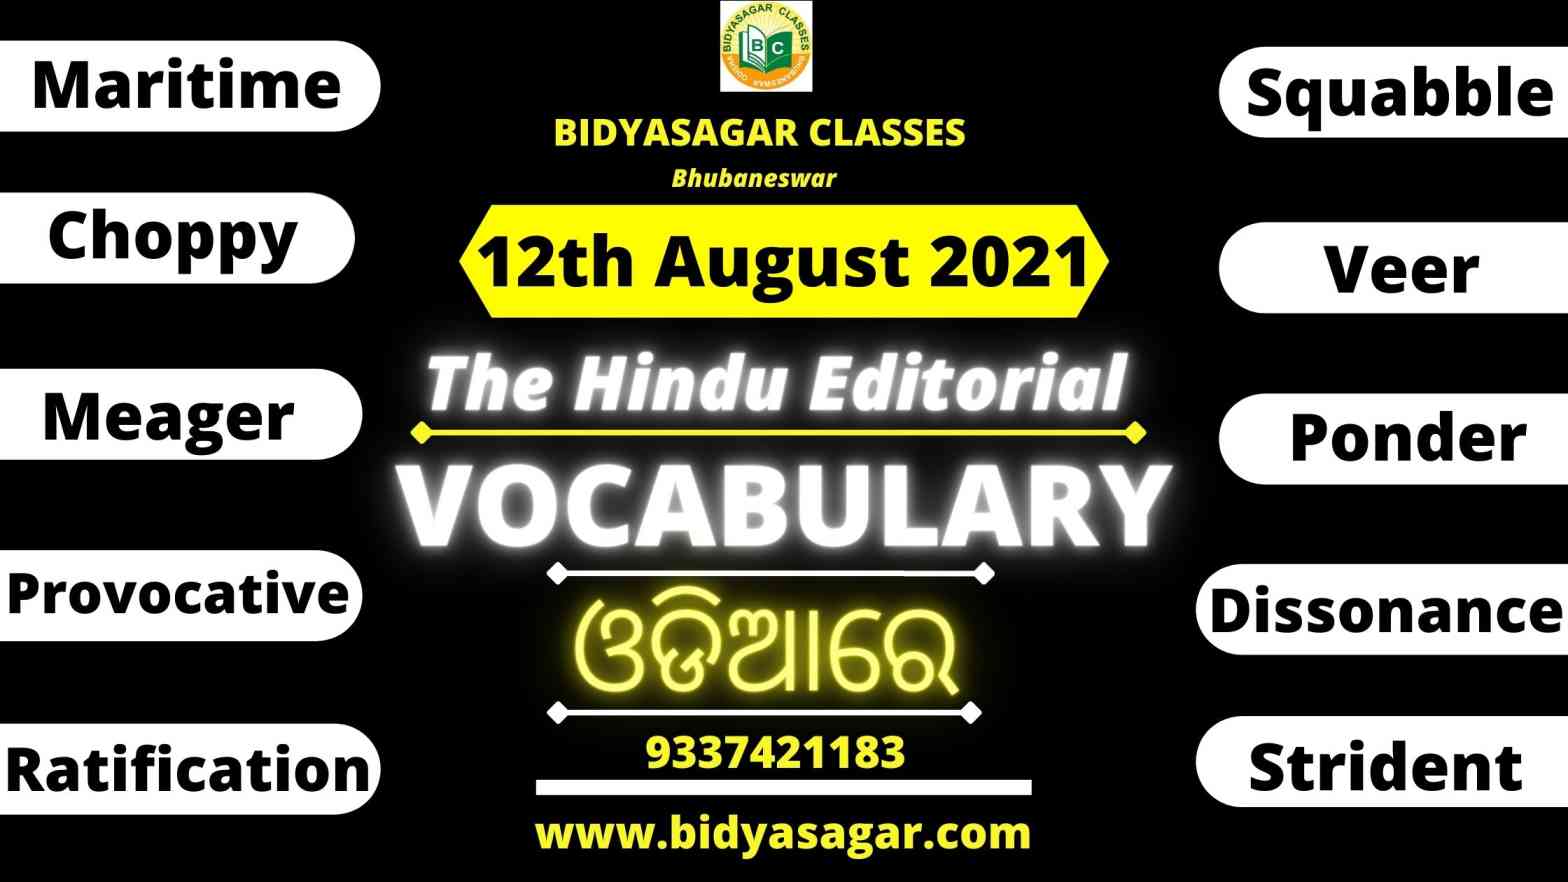 The Hindu Editorial Vocabulary of 12th August 2021 | BIDYASAGAR CLASSES